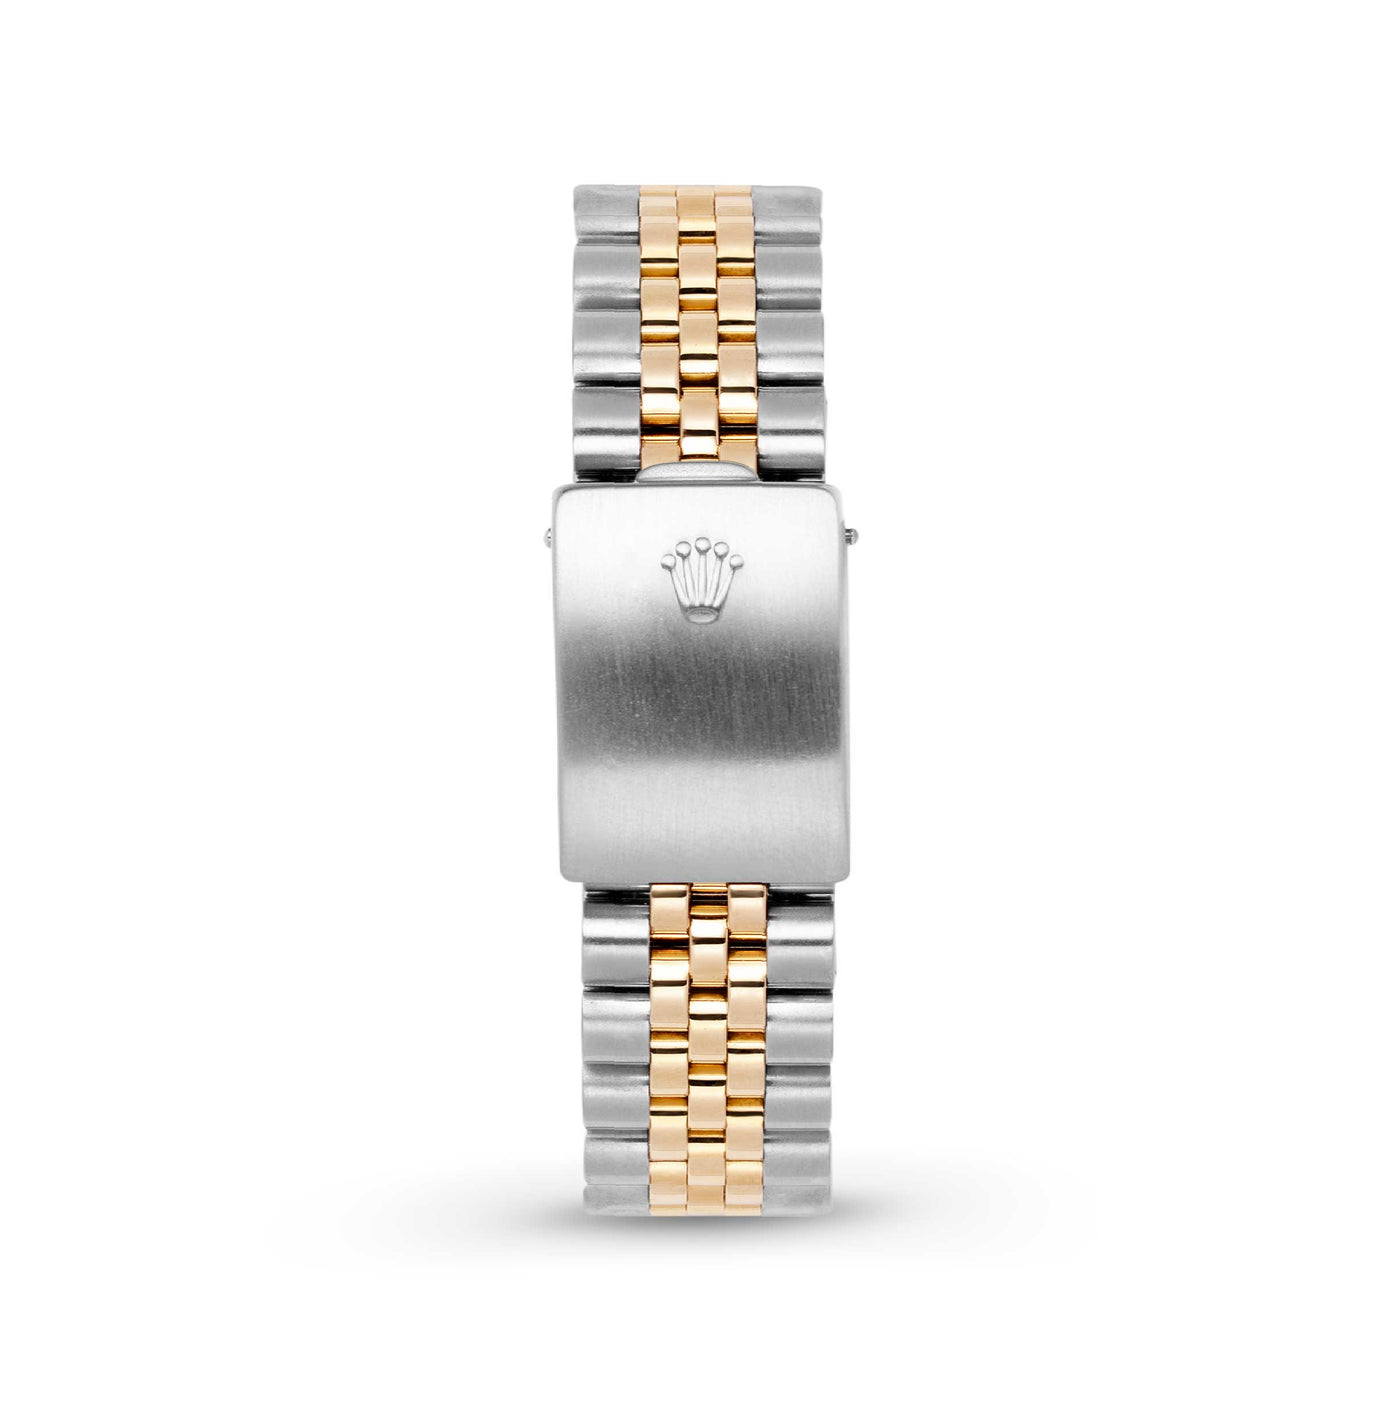 Rolex Datejust Diamond Bezel Watch 36mm Green Arabic Dial | 2.25ct